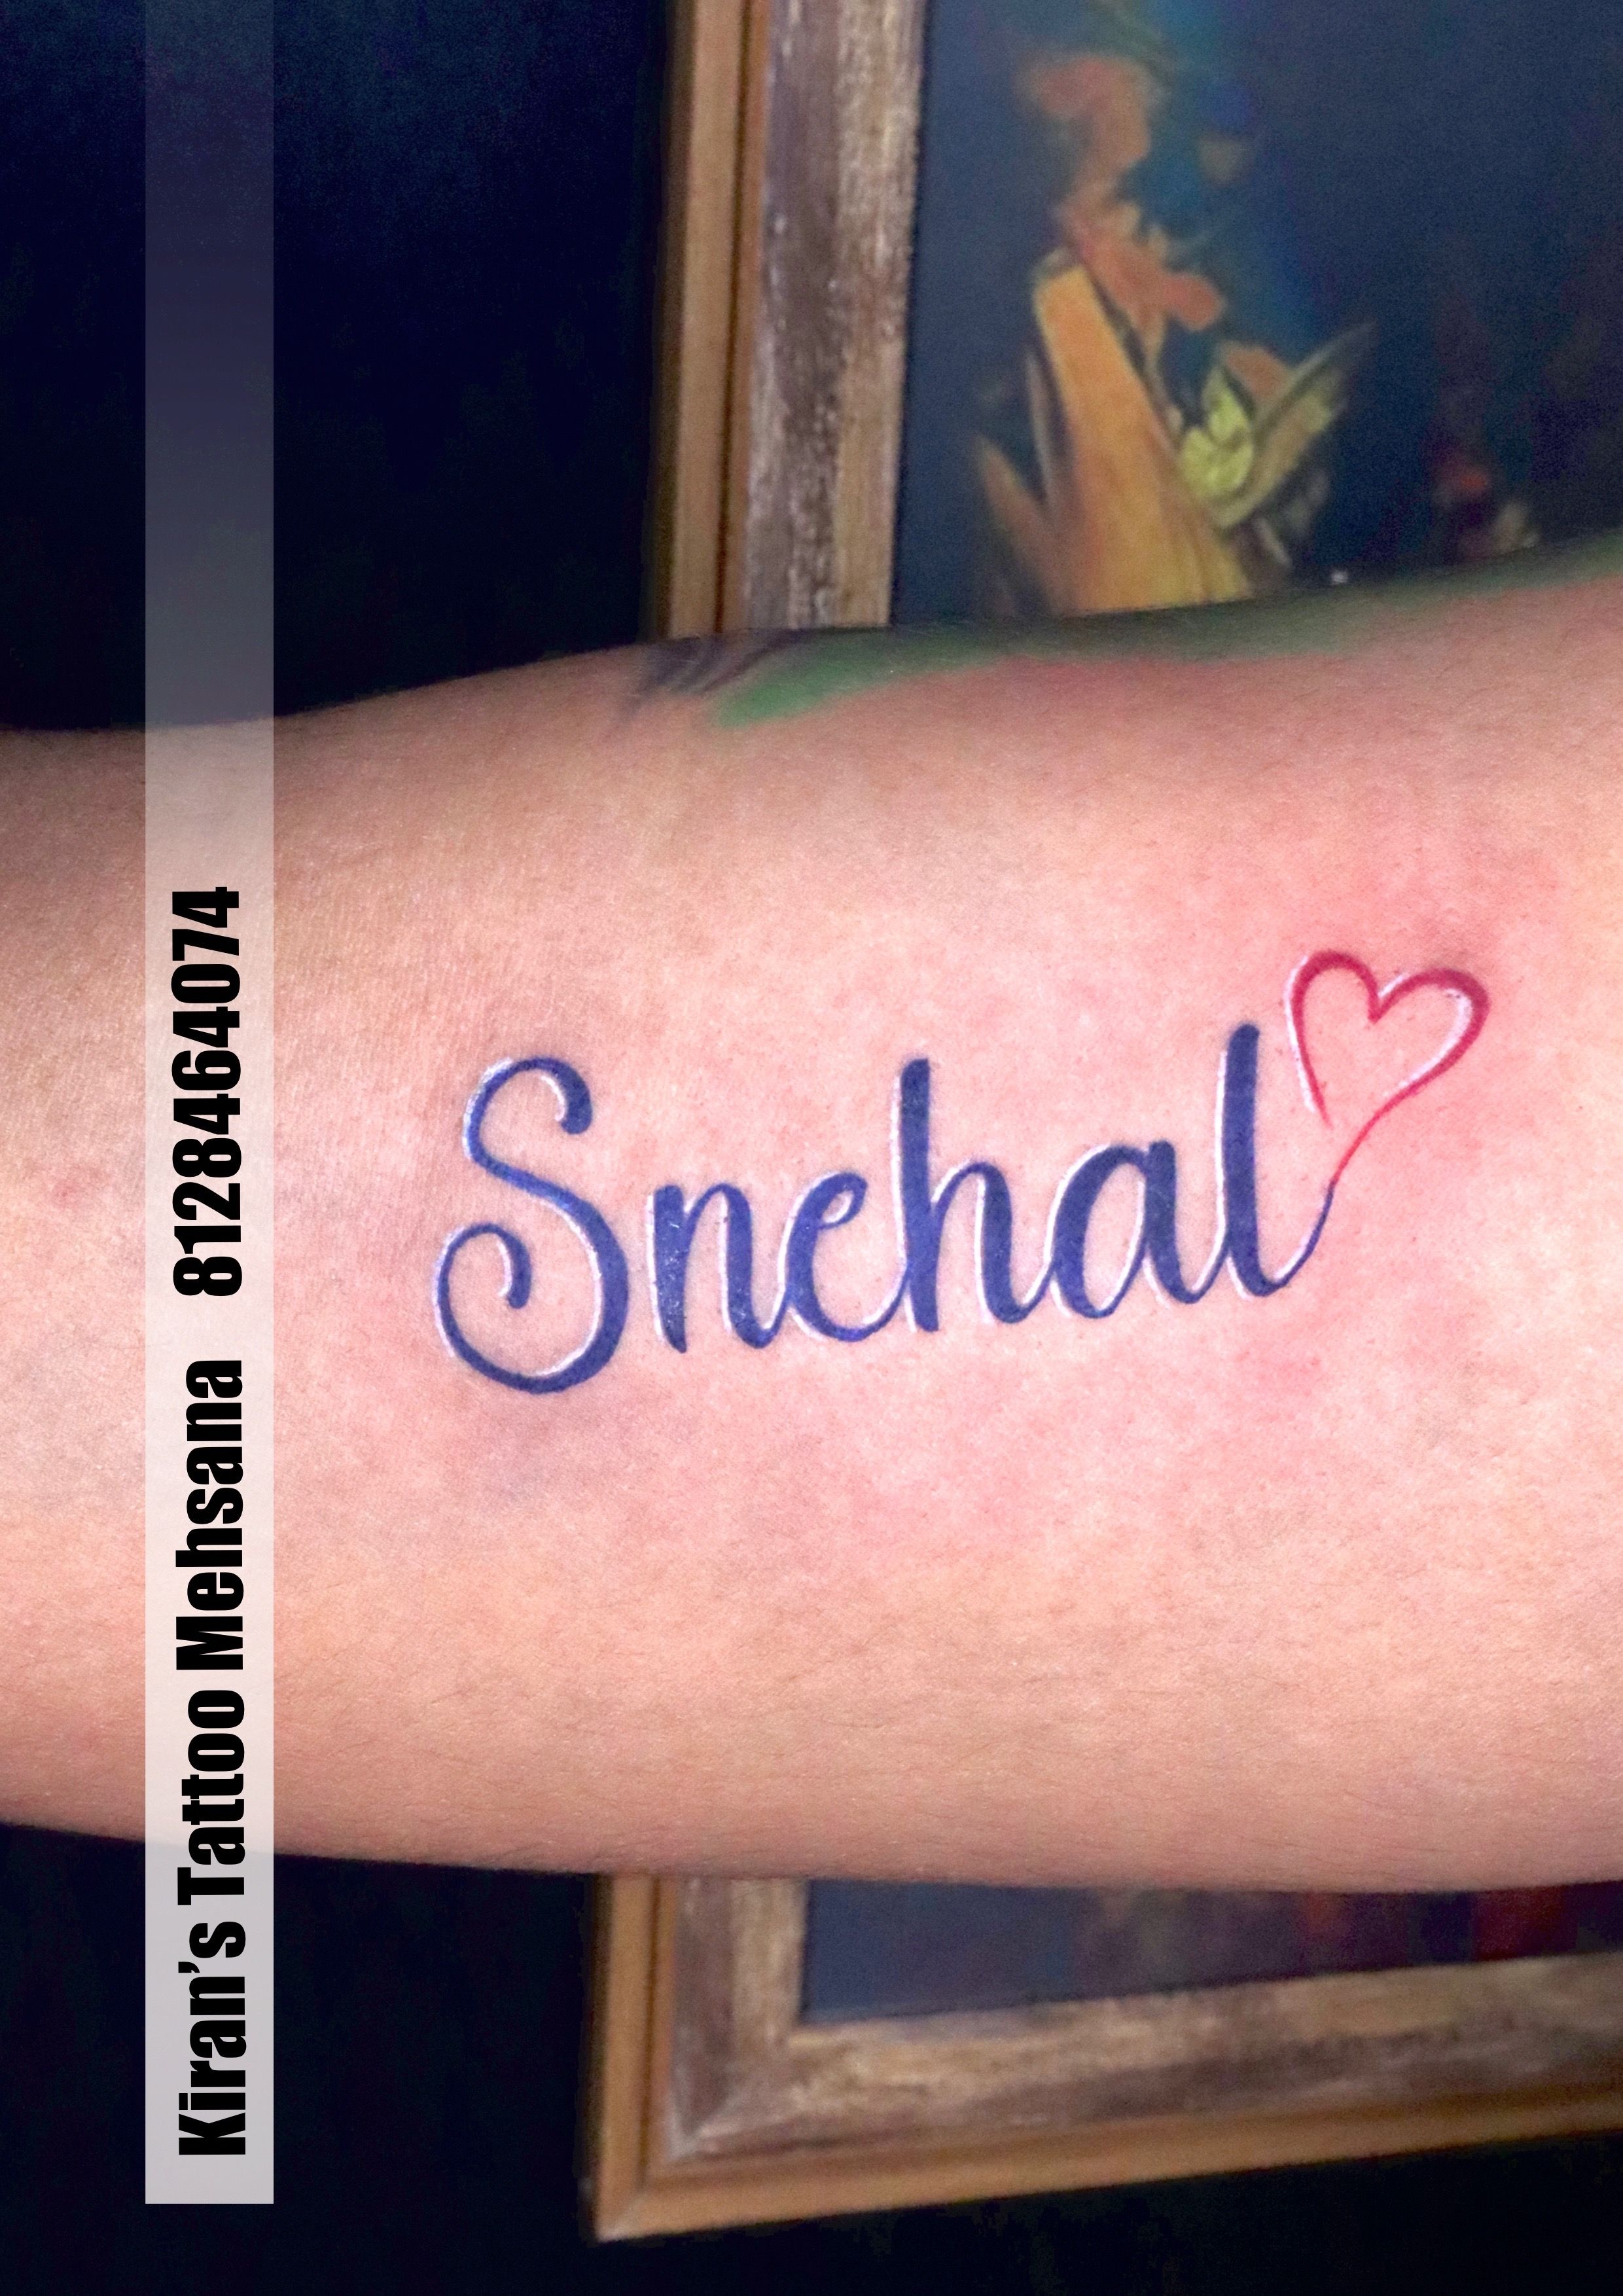 Tattoo uploaded by Vipul Chaudhary • Chehar maa tattoo |Maa chehar tattoo  |Chehar mataji nu tattoo |Chehar tattoo • Tattoodo